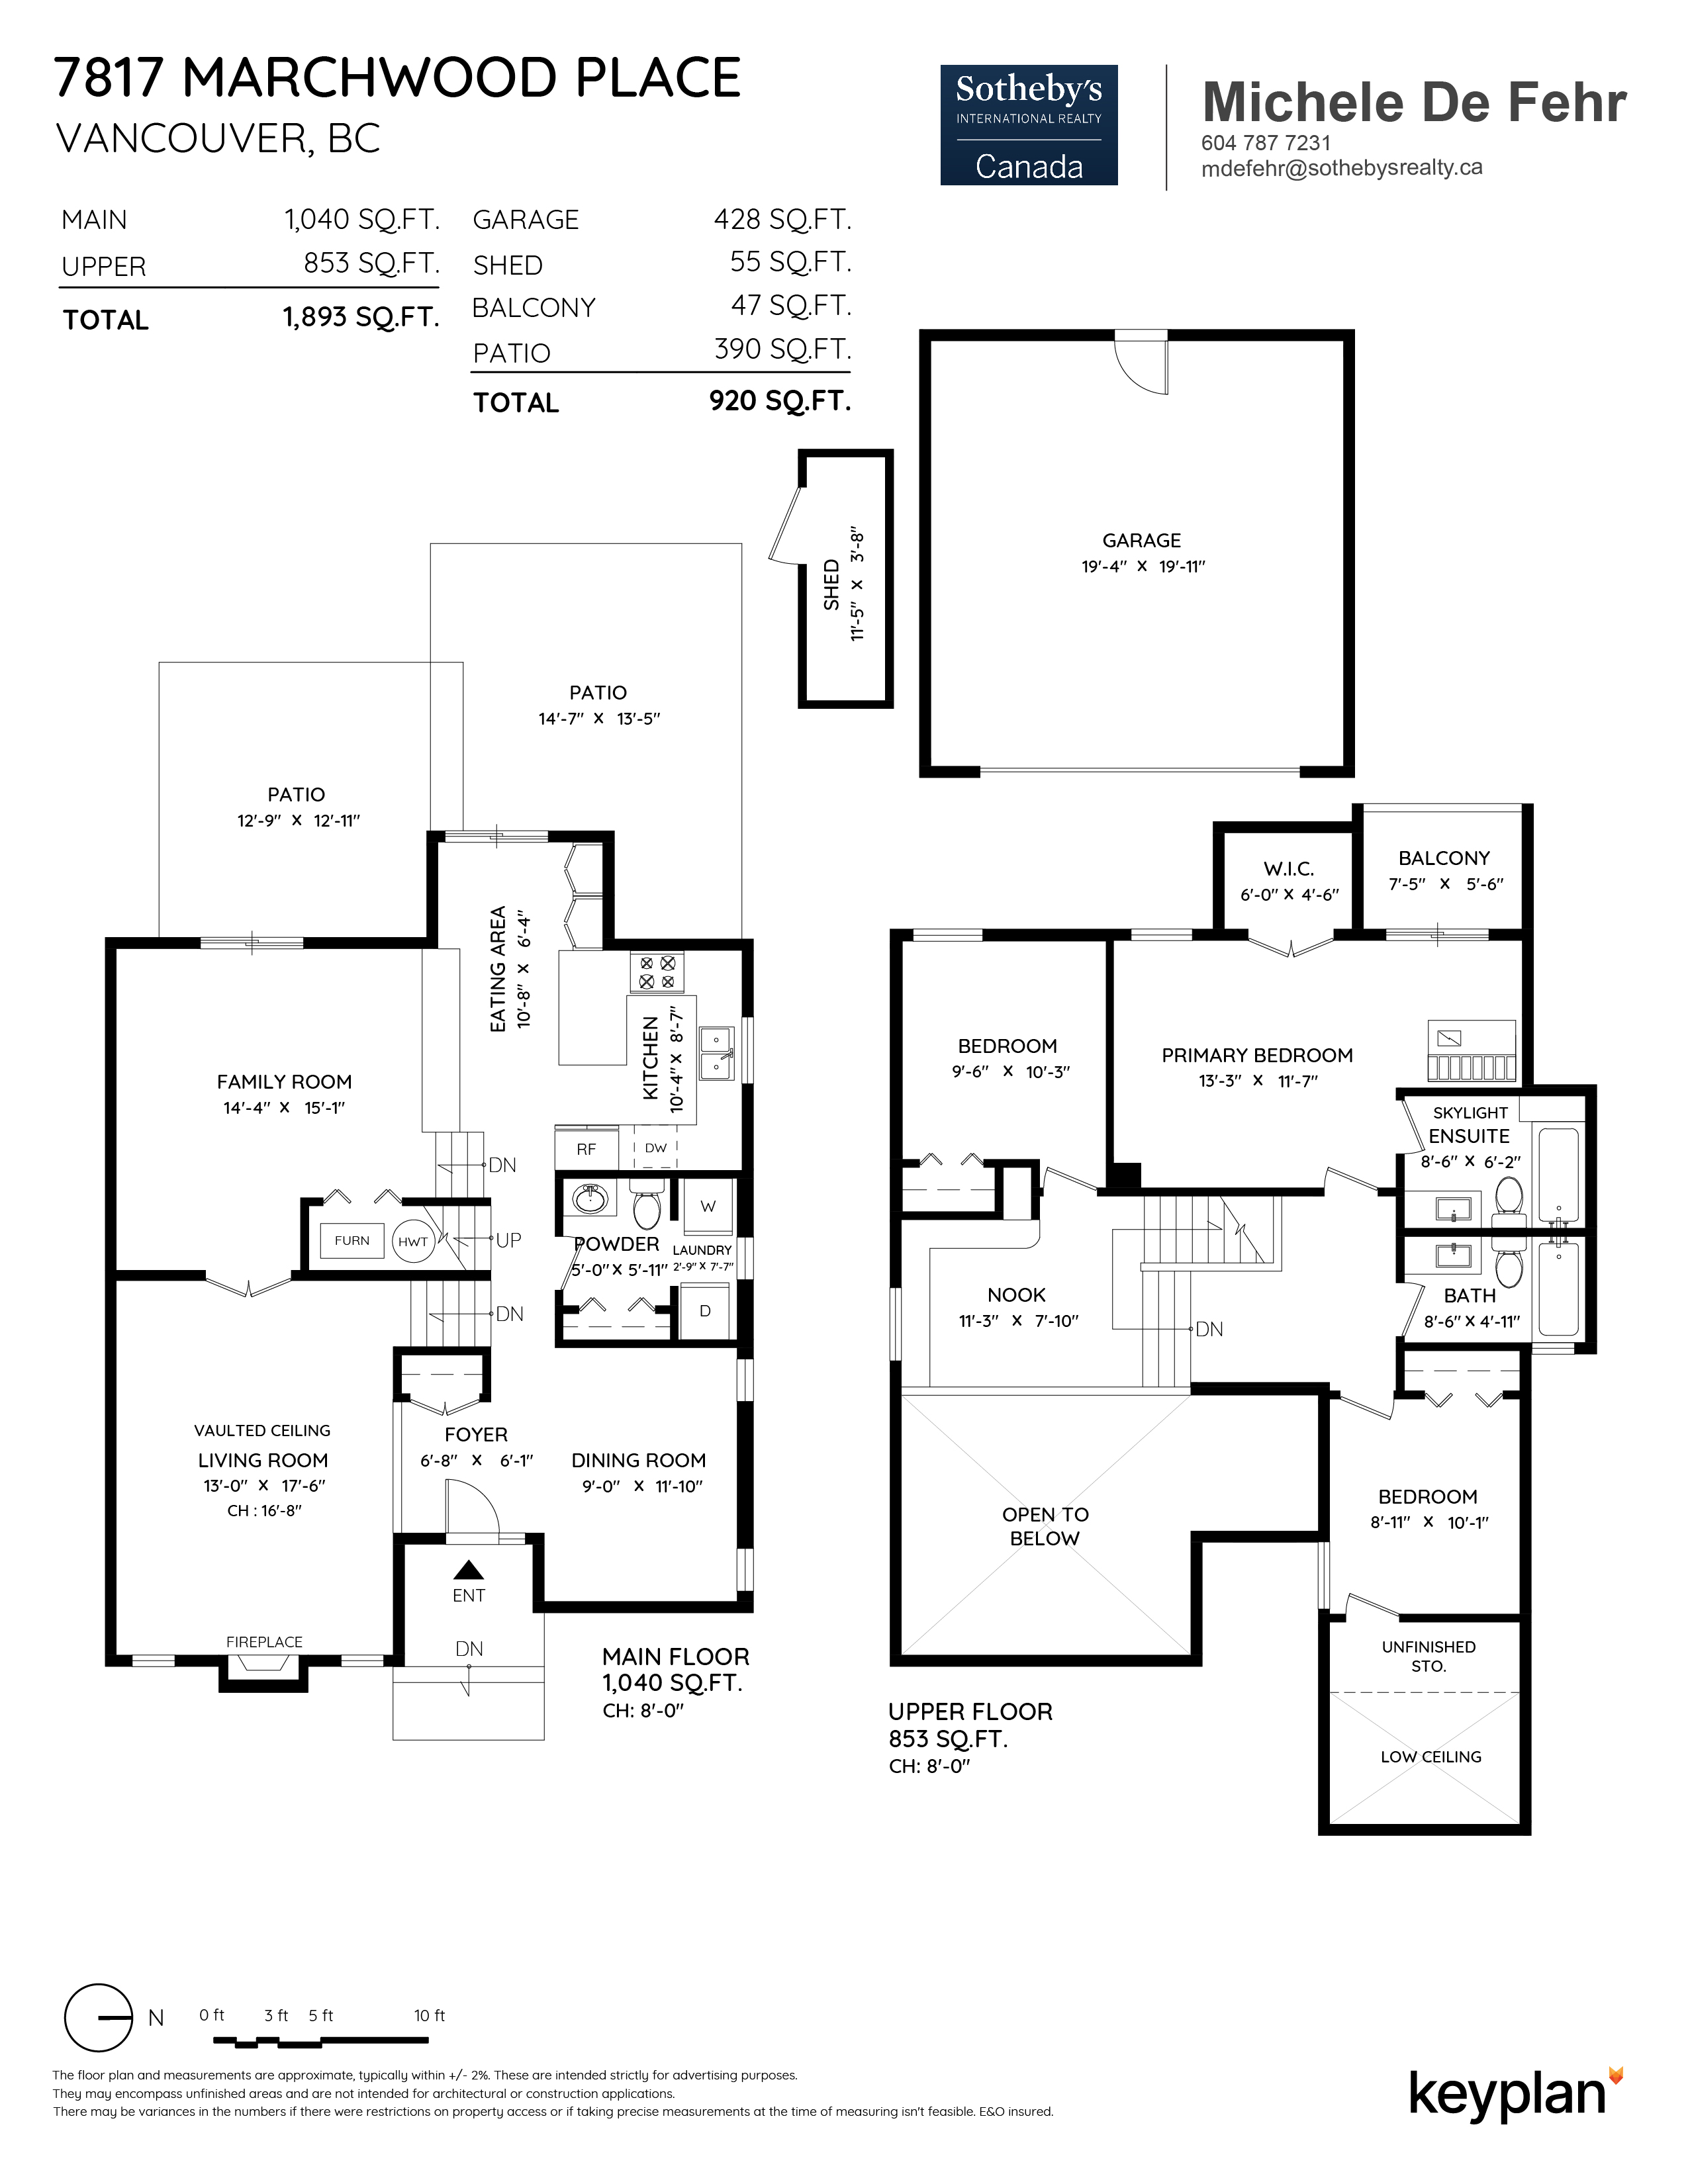 Michele De Fehr - 7817 Marchwood Place, Vancouver, BC, Canada | Floor Plan 1